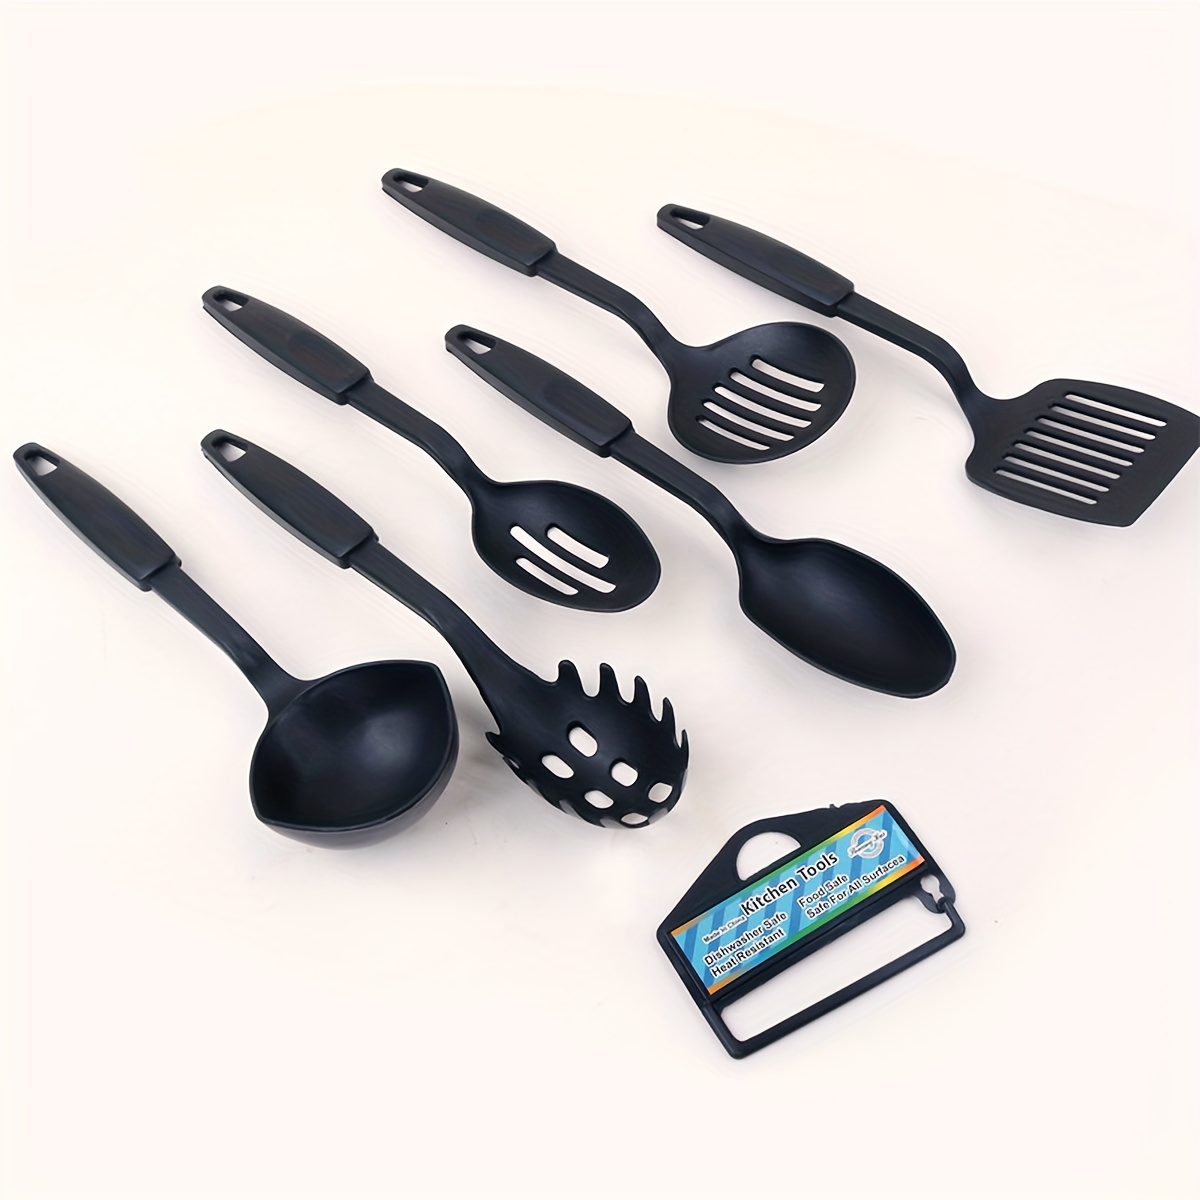 6pcs/set Plastic Nylon Integrated Kitchen Cooking Utensils Set